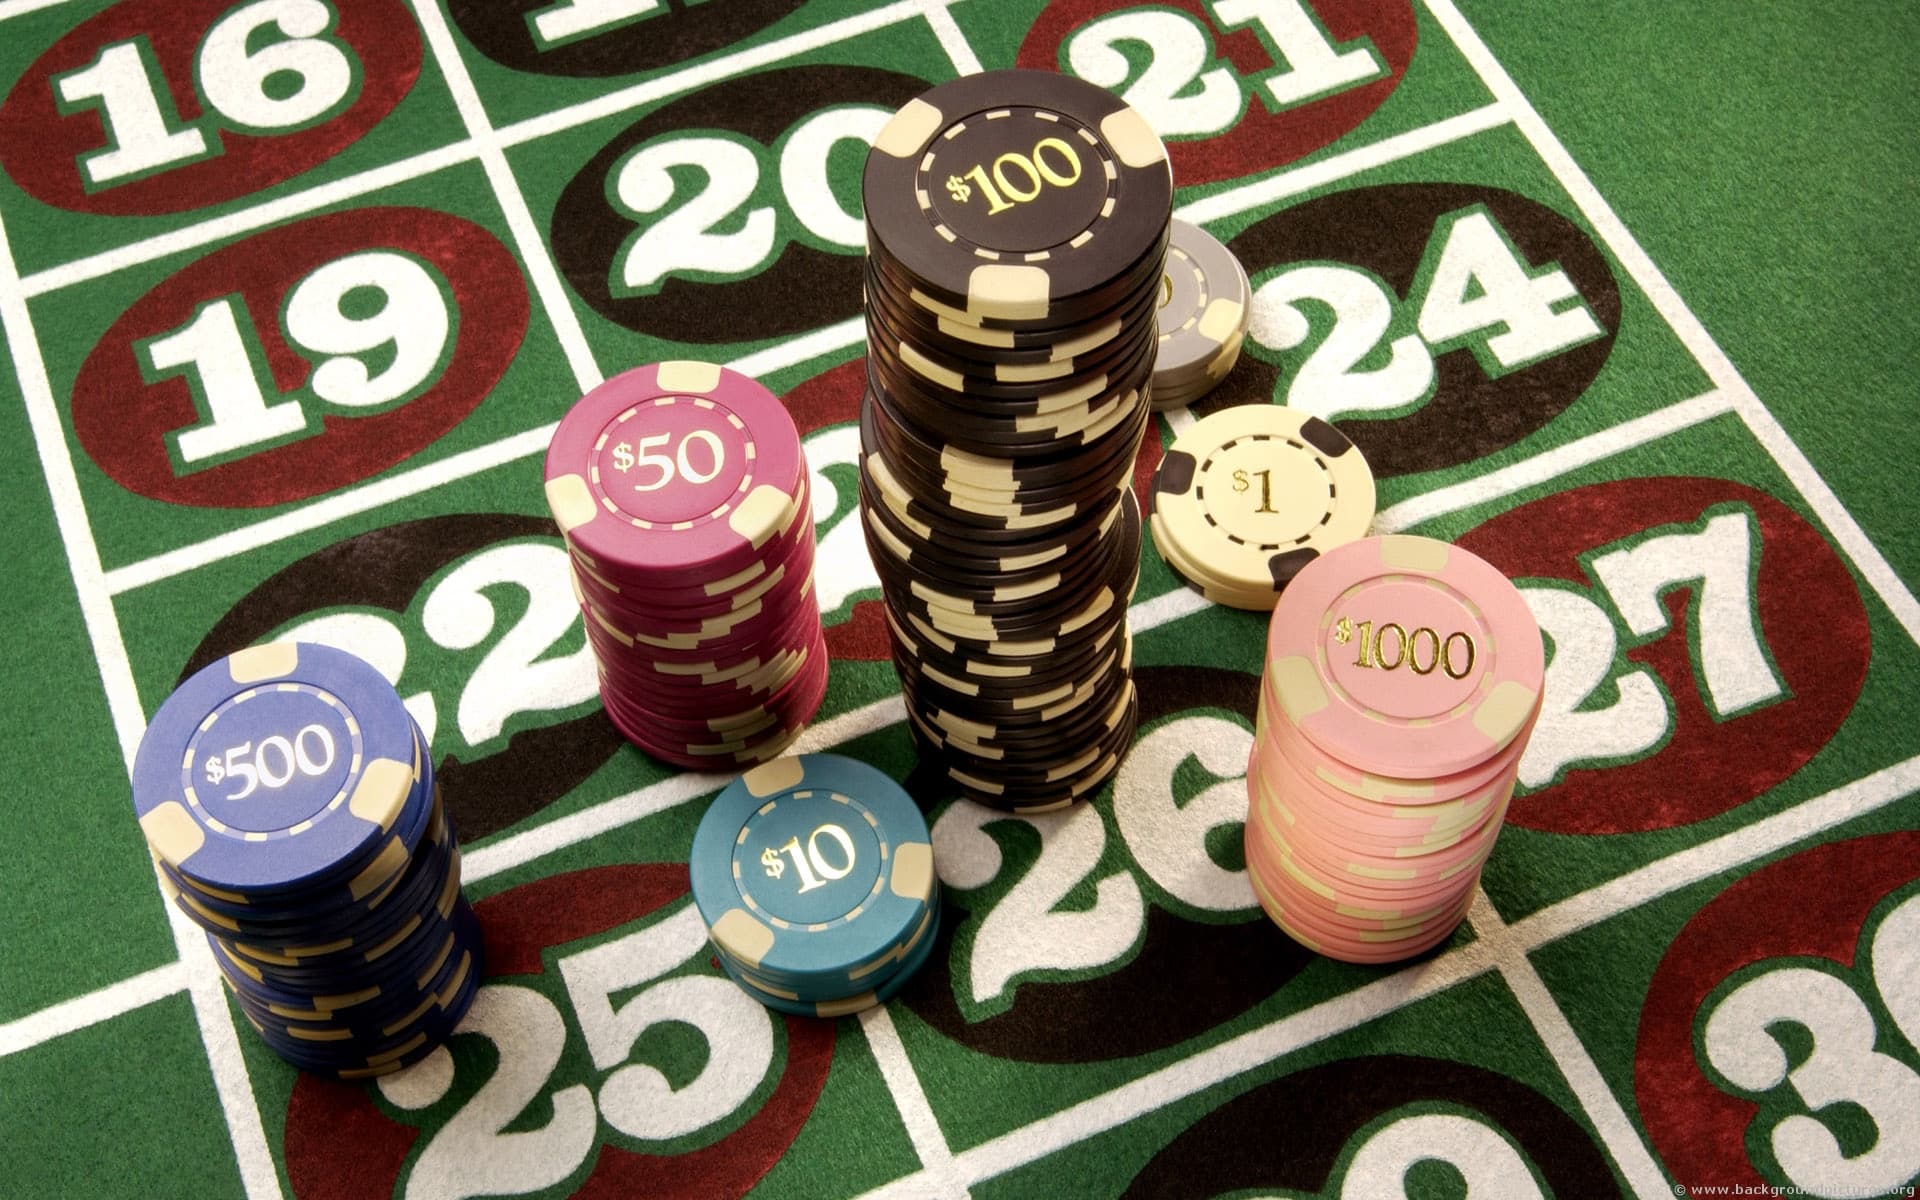 Kajot casino 70 free spins